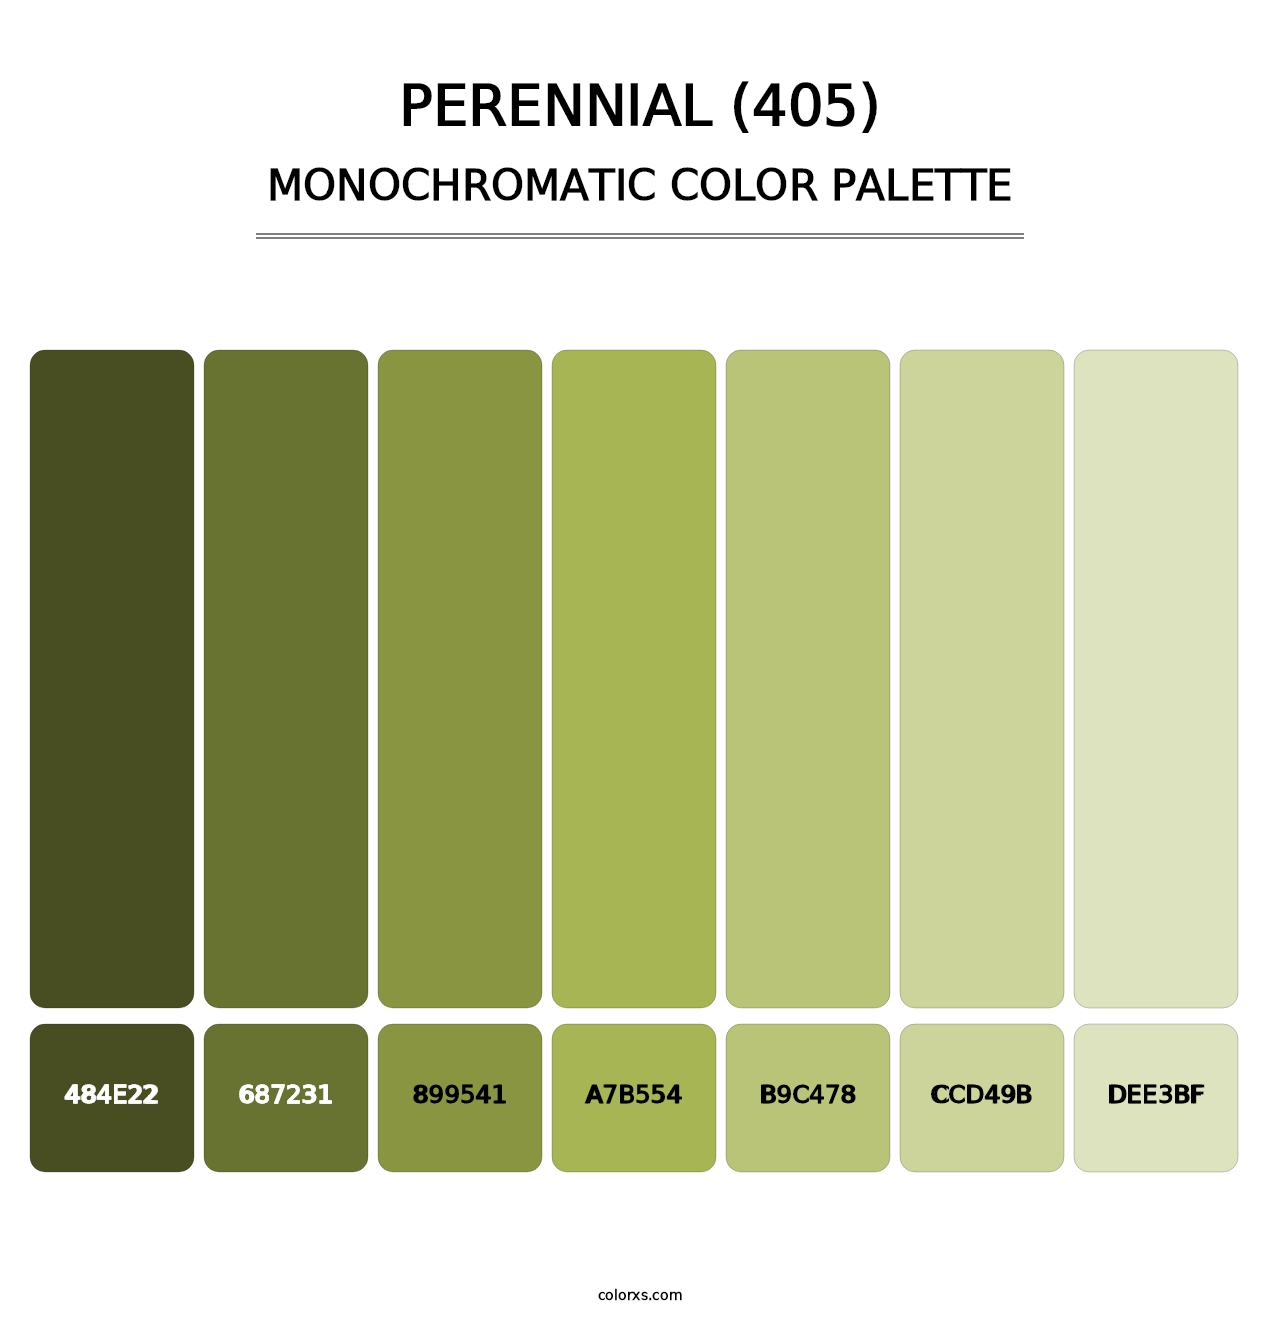 Perennial (405) - Monochromatic Color Palette